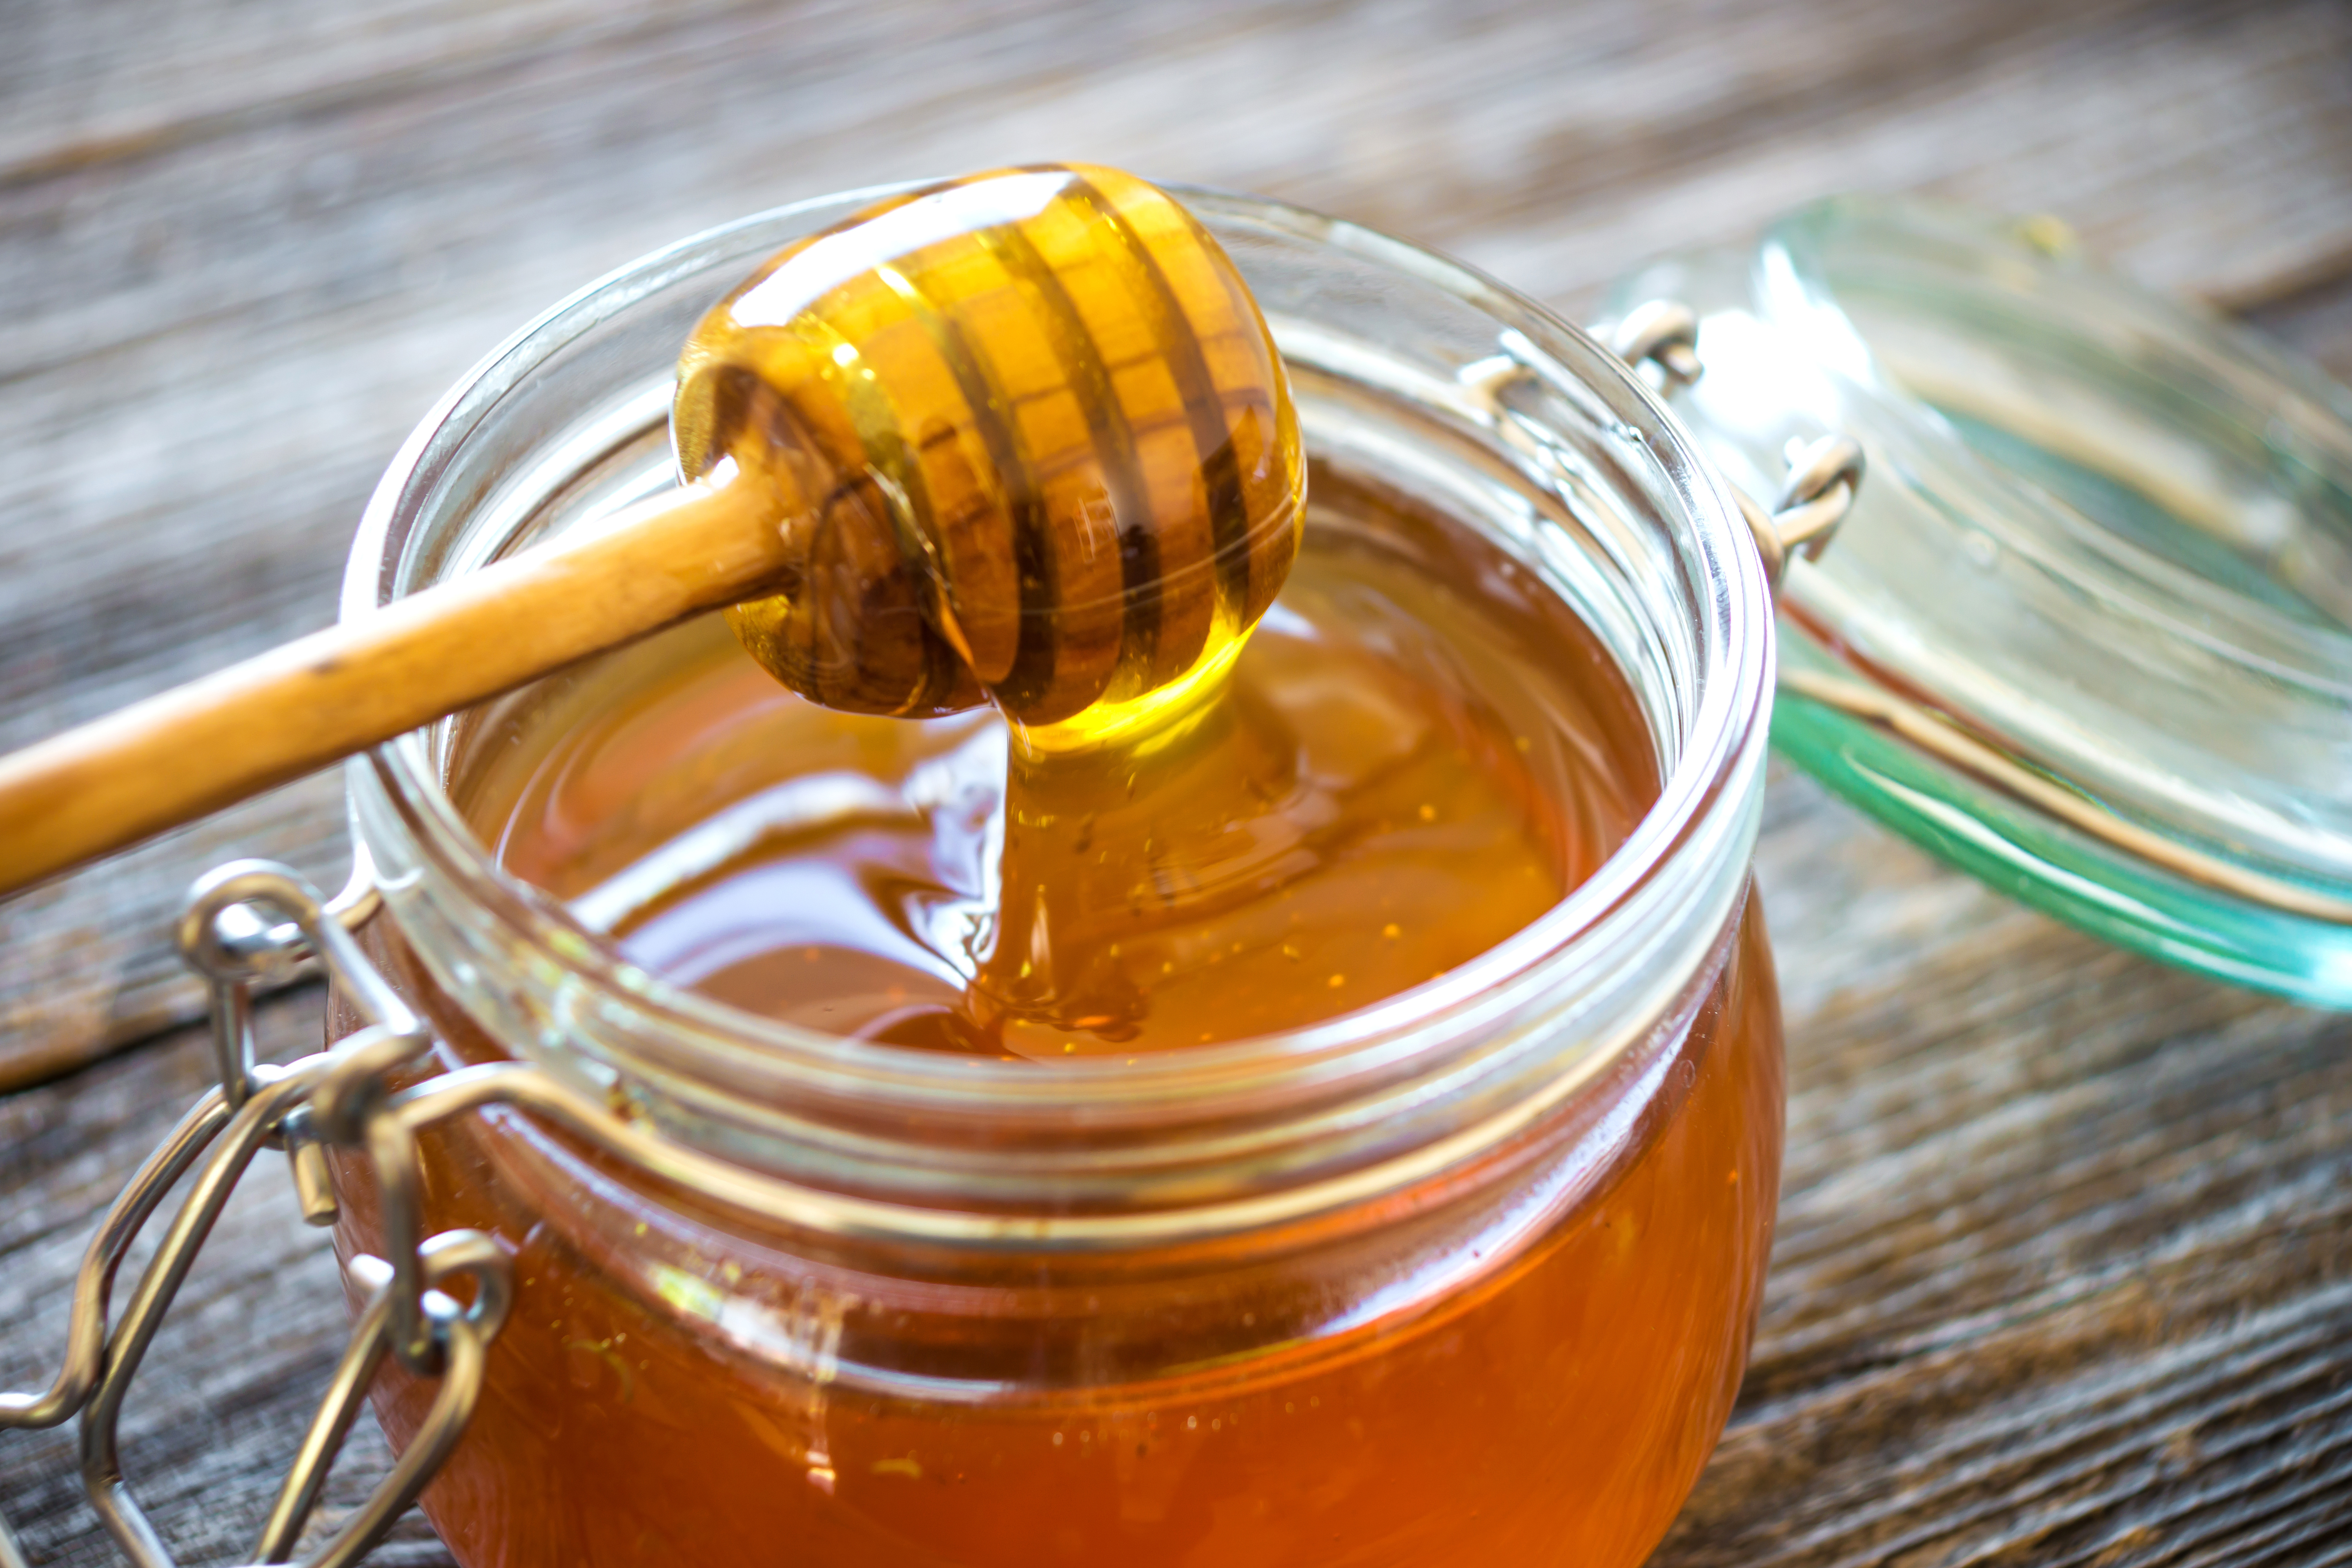 Honey фото. Мёд кориандровый. Мед кориандрово-разнотравный. Мед кориандр. Кориандровый мед фото.